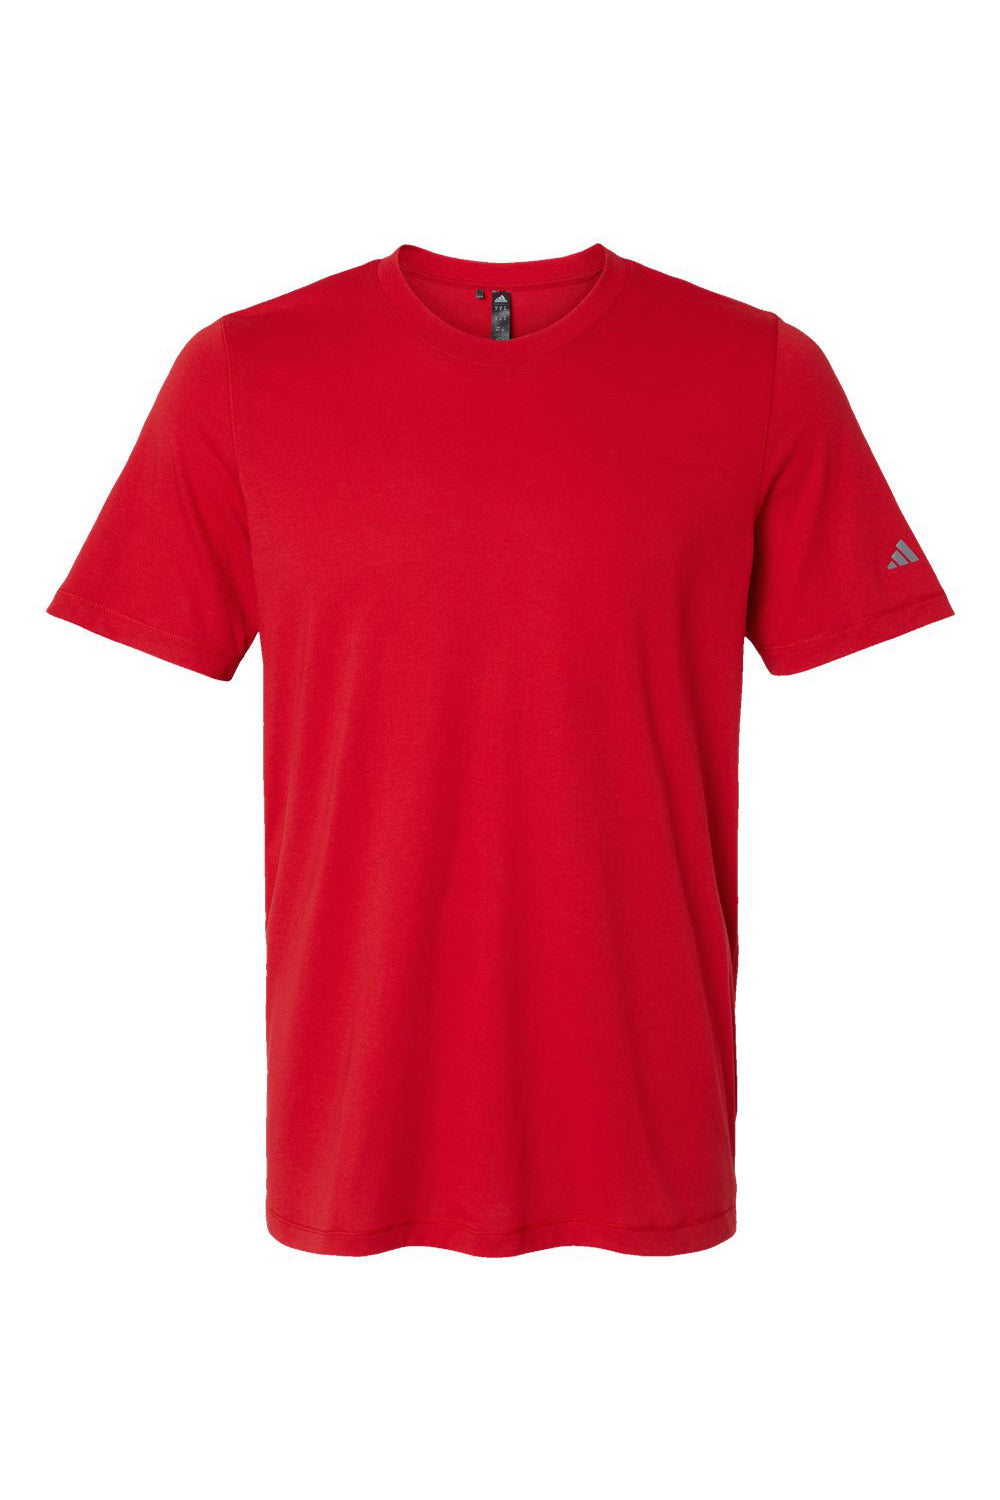 Adidas A556 Mens Short Sleeve Crewneck T-Shirt Power Red Flat Front